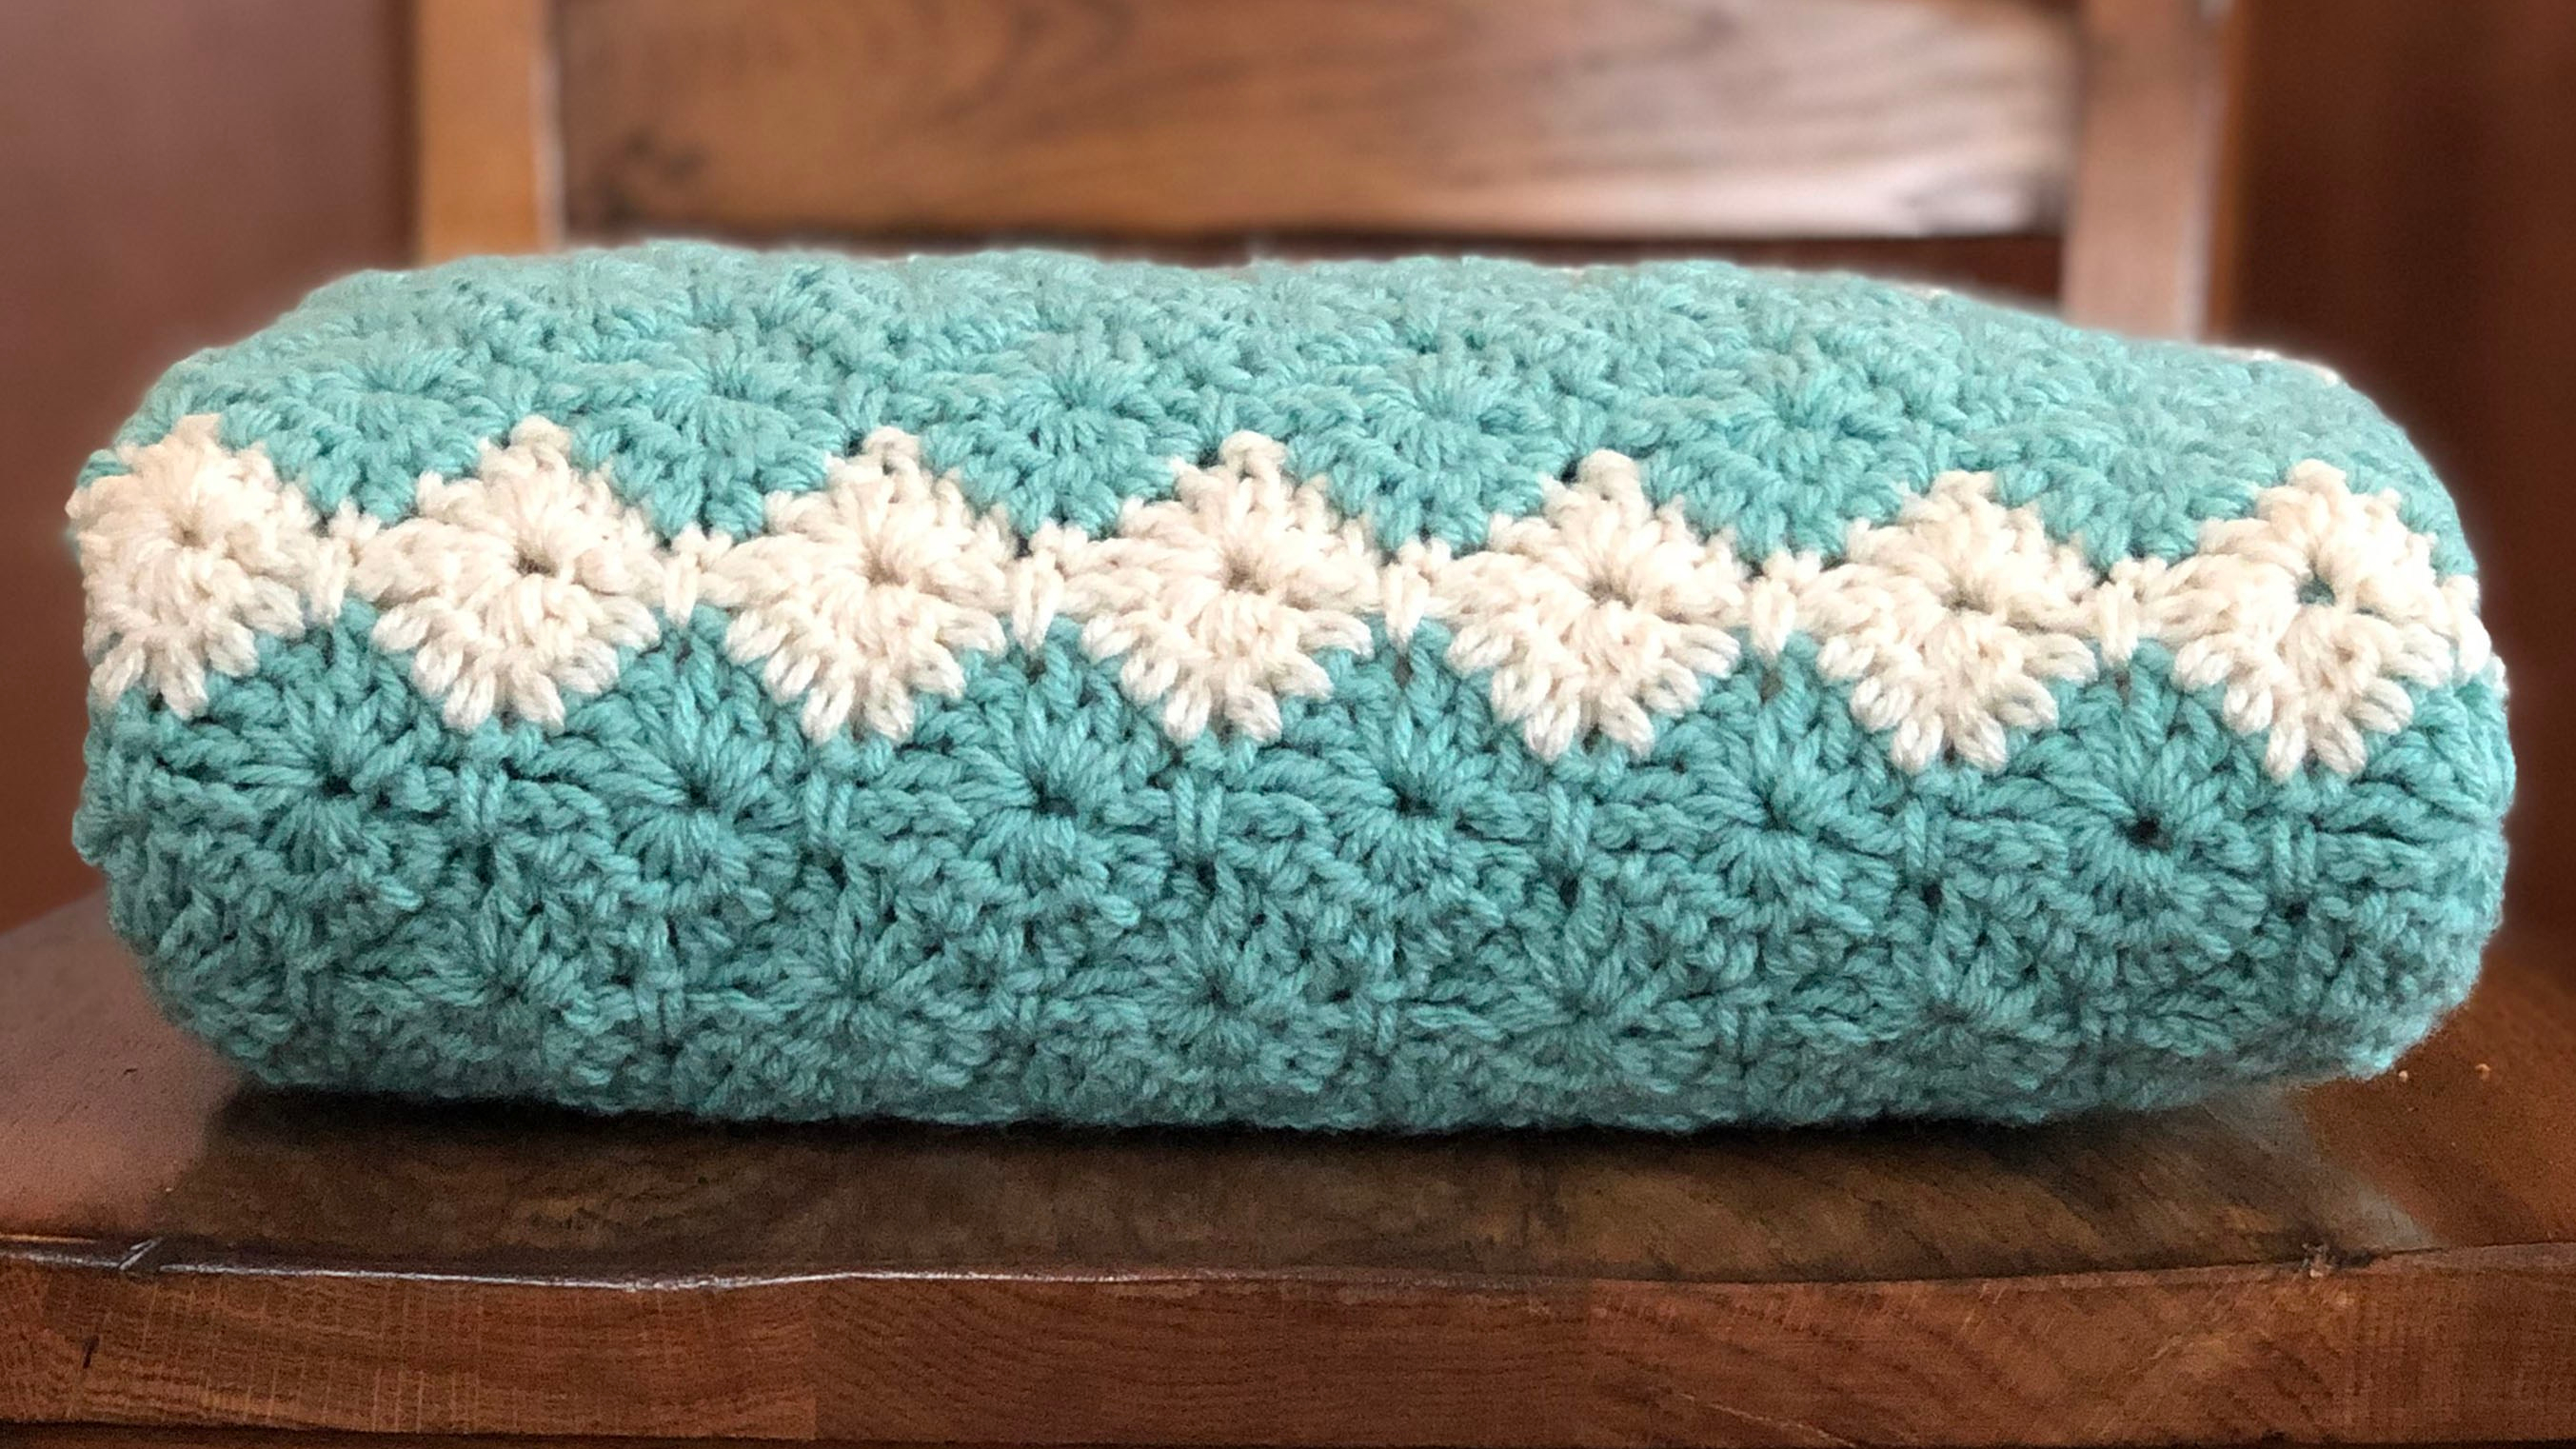 Meadow Crib Lapghan Throw Blanket Crochet Pattern using Harlequin Stitch